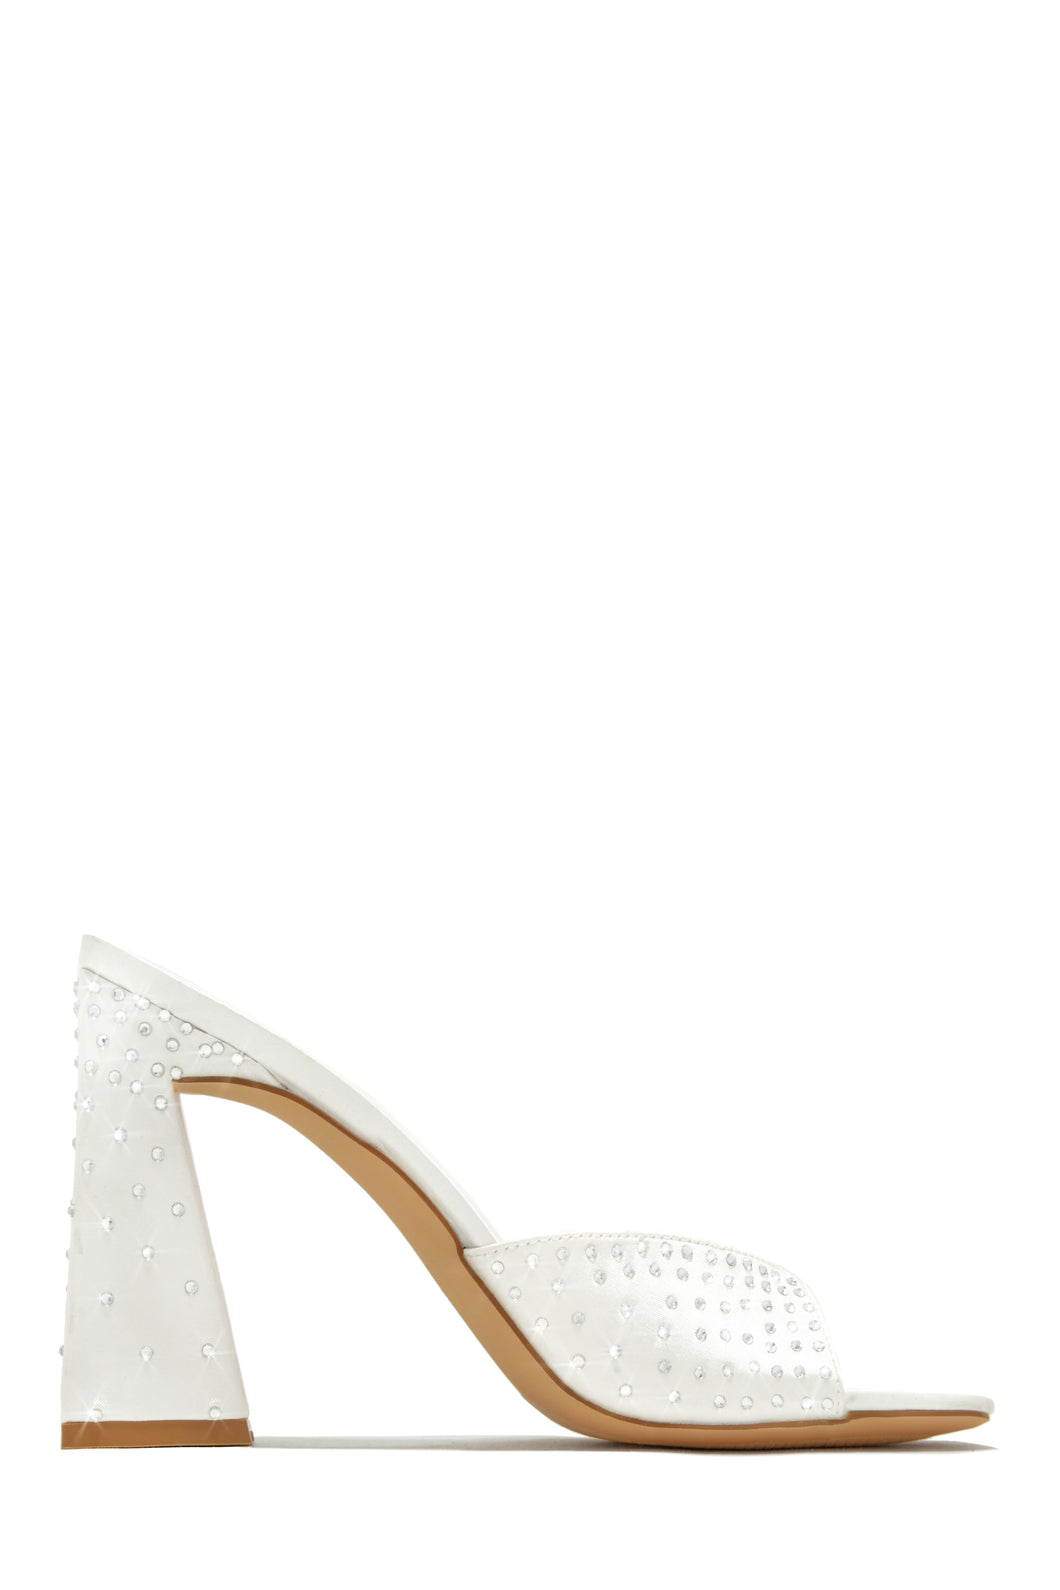 bride heel with stunning rhinestones all over shoe. 